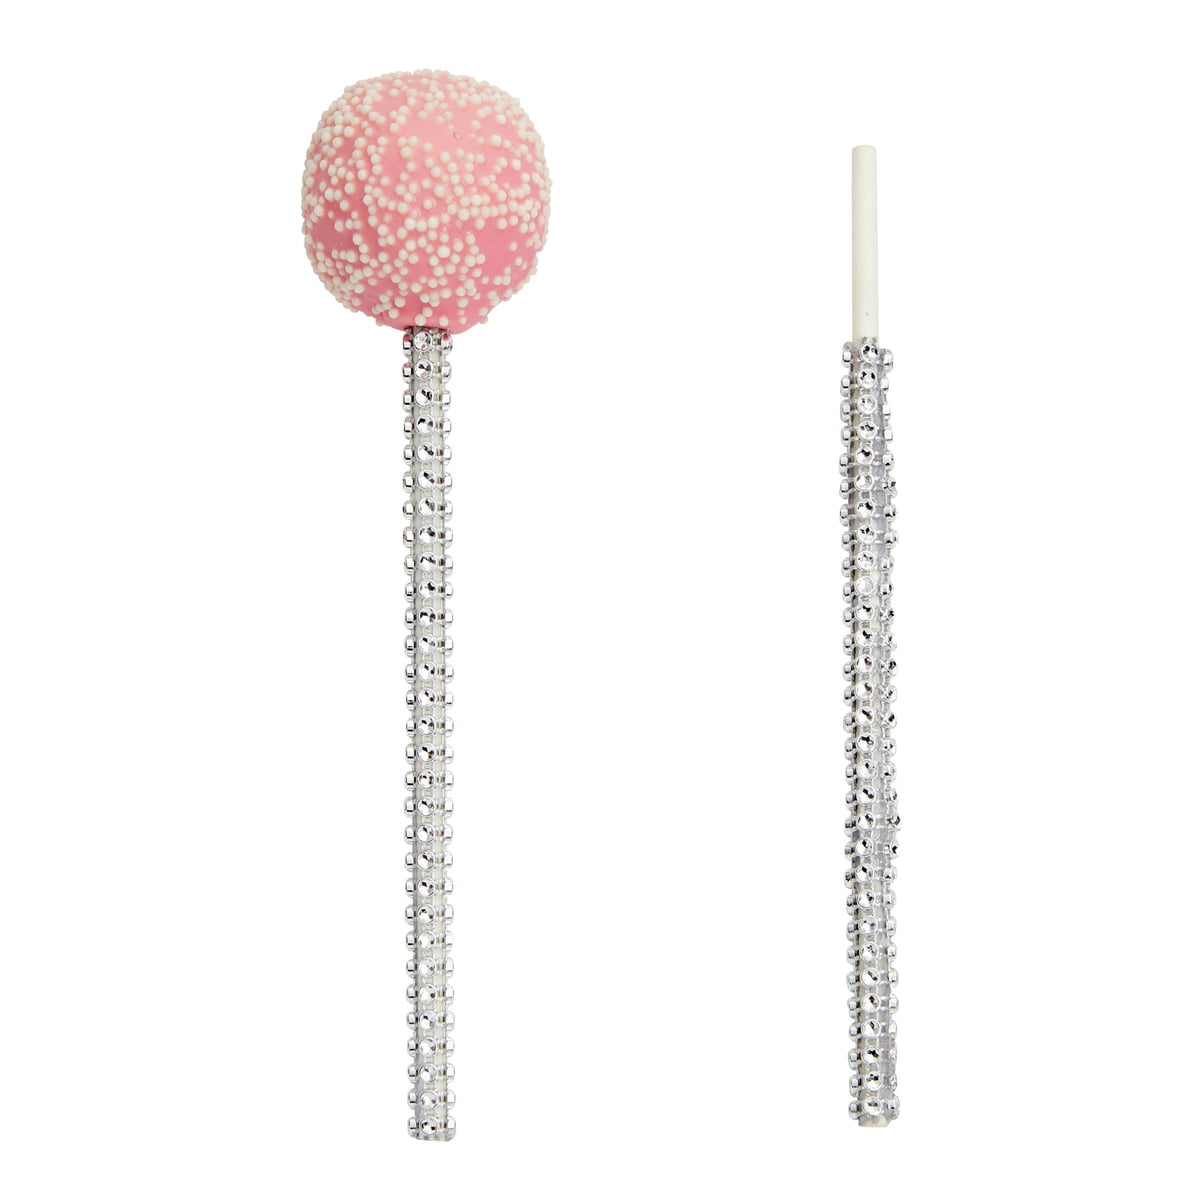 Bling Rhinestone Apple Sticks- Light Pink - Sweet Dreams Gourmet